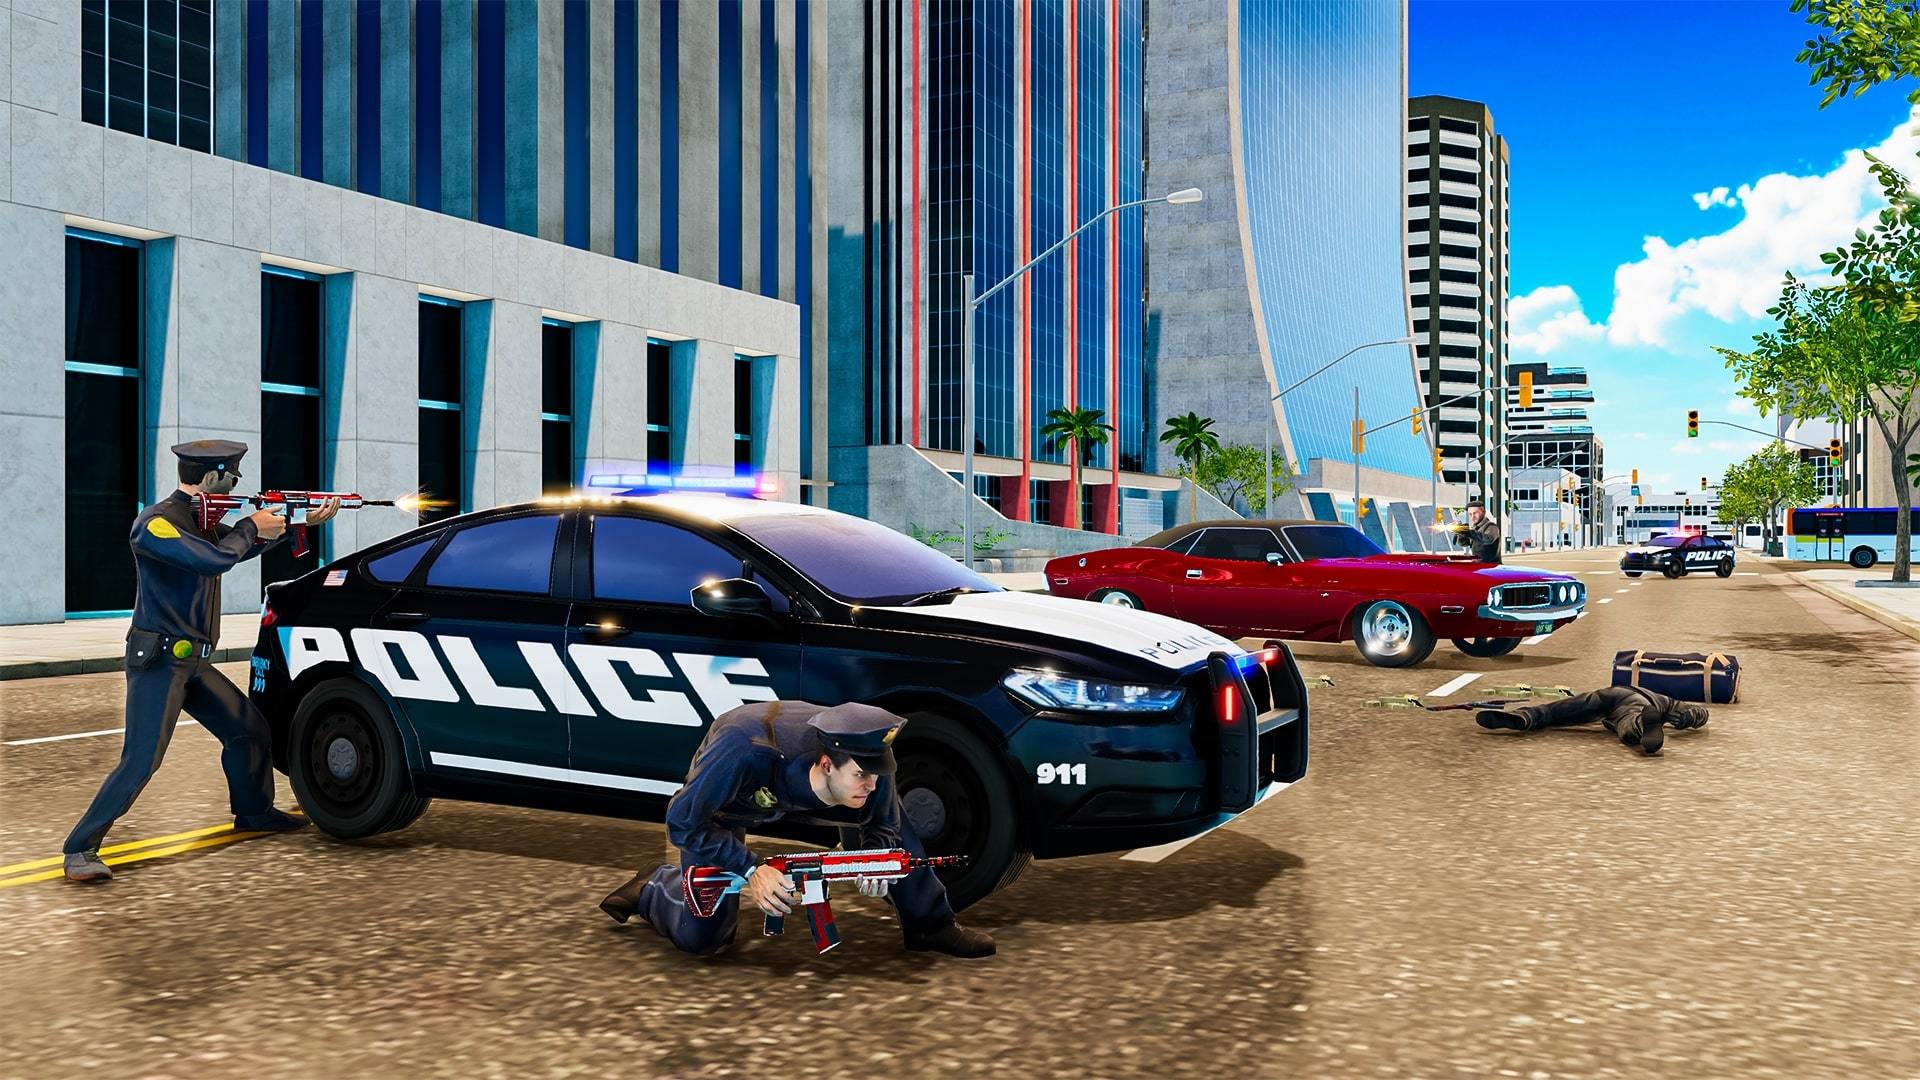 Screenshot 1 of City Crime Police Sim Game 1